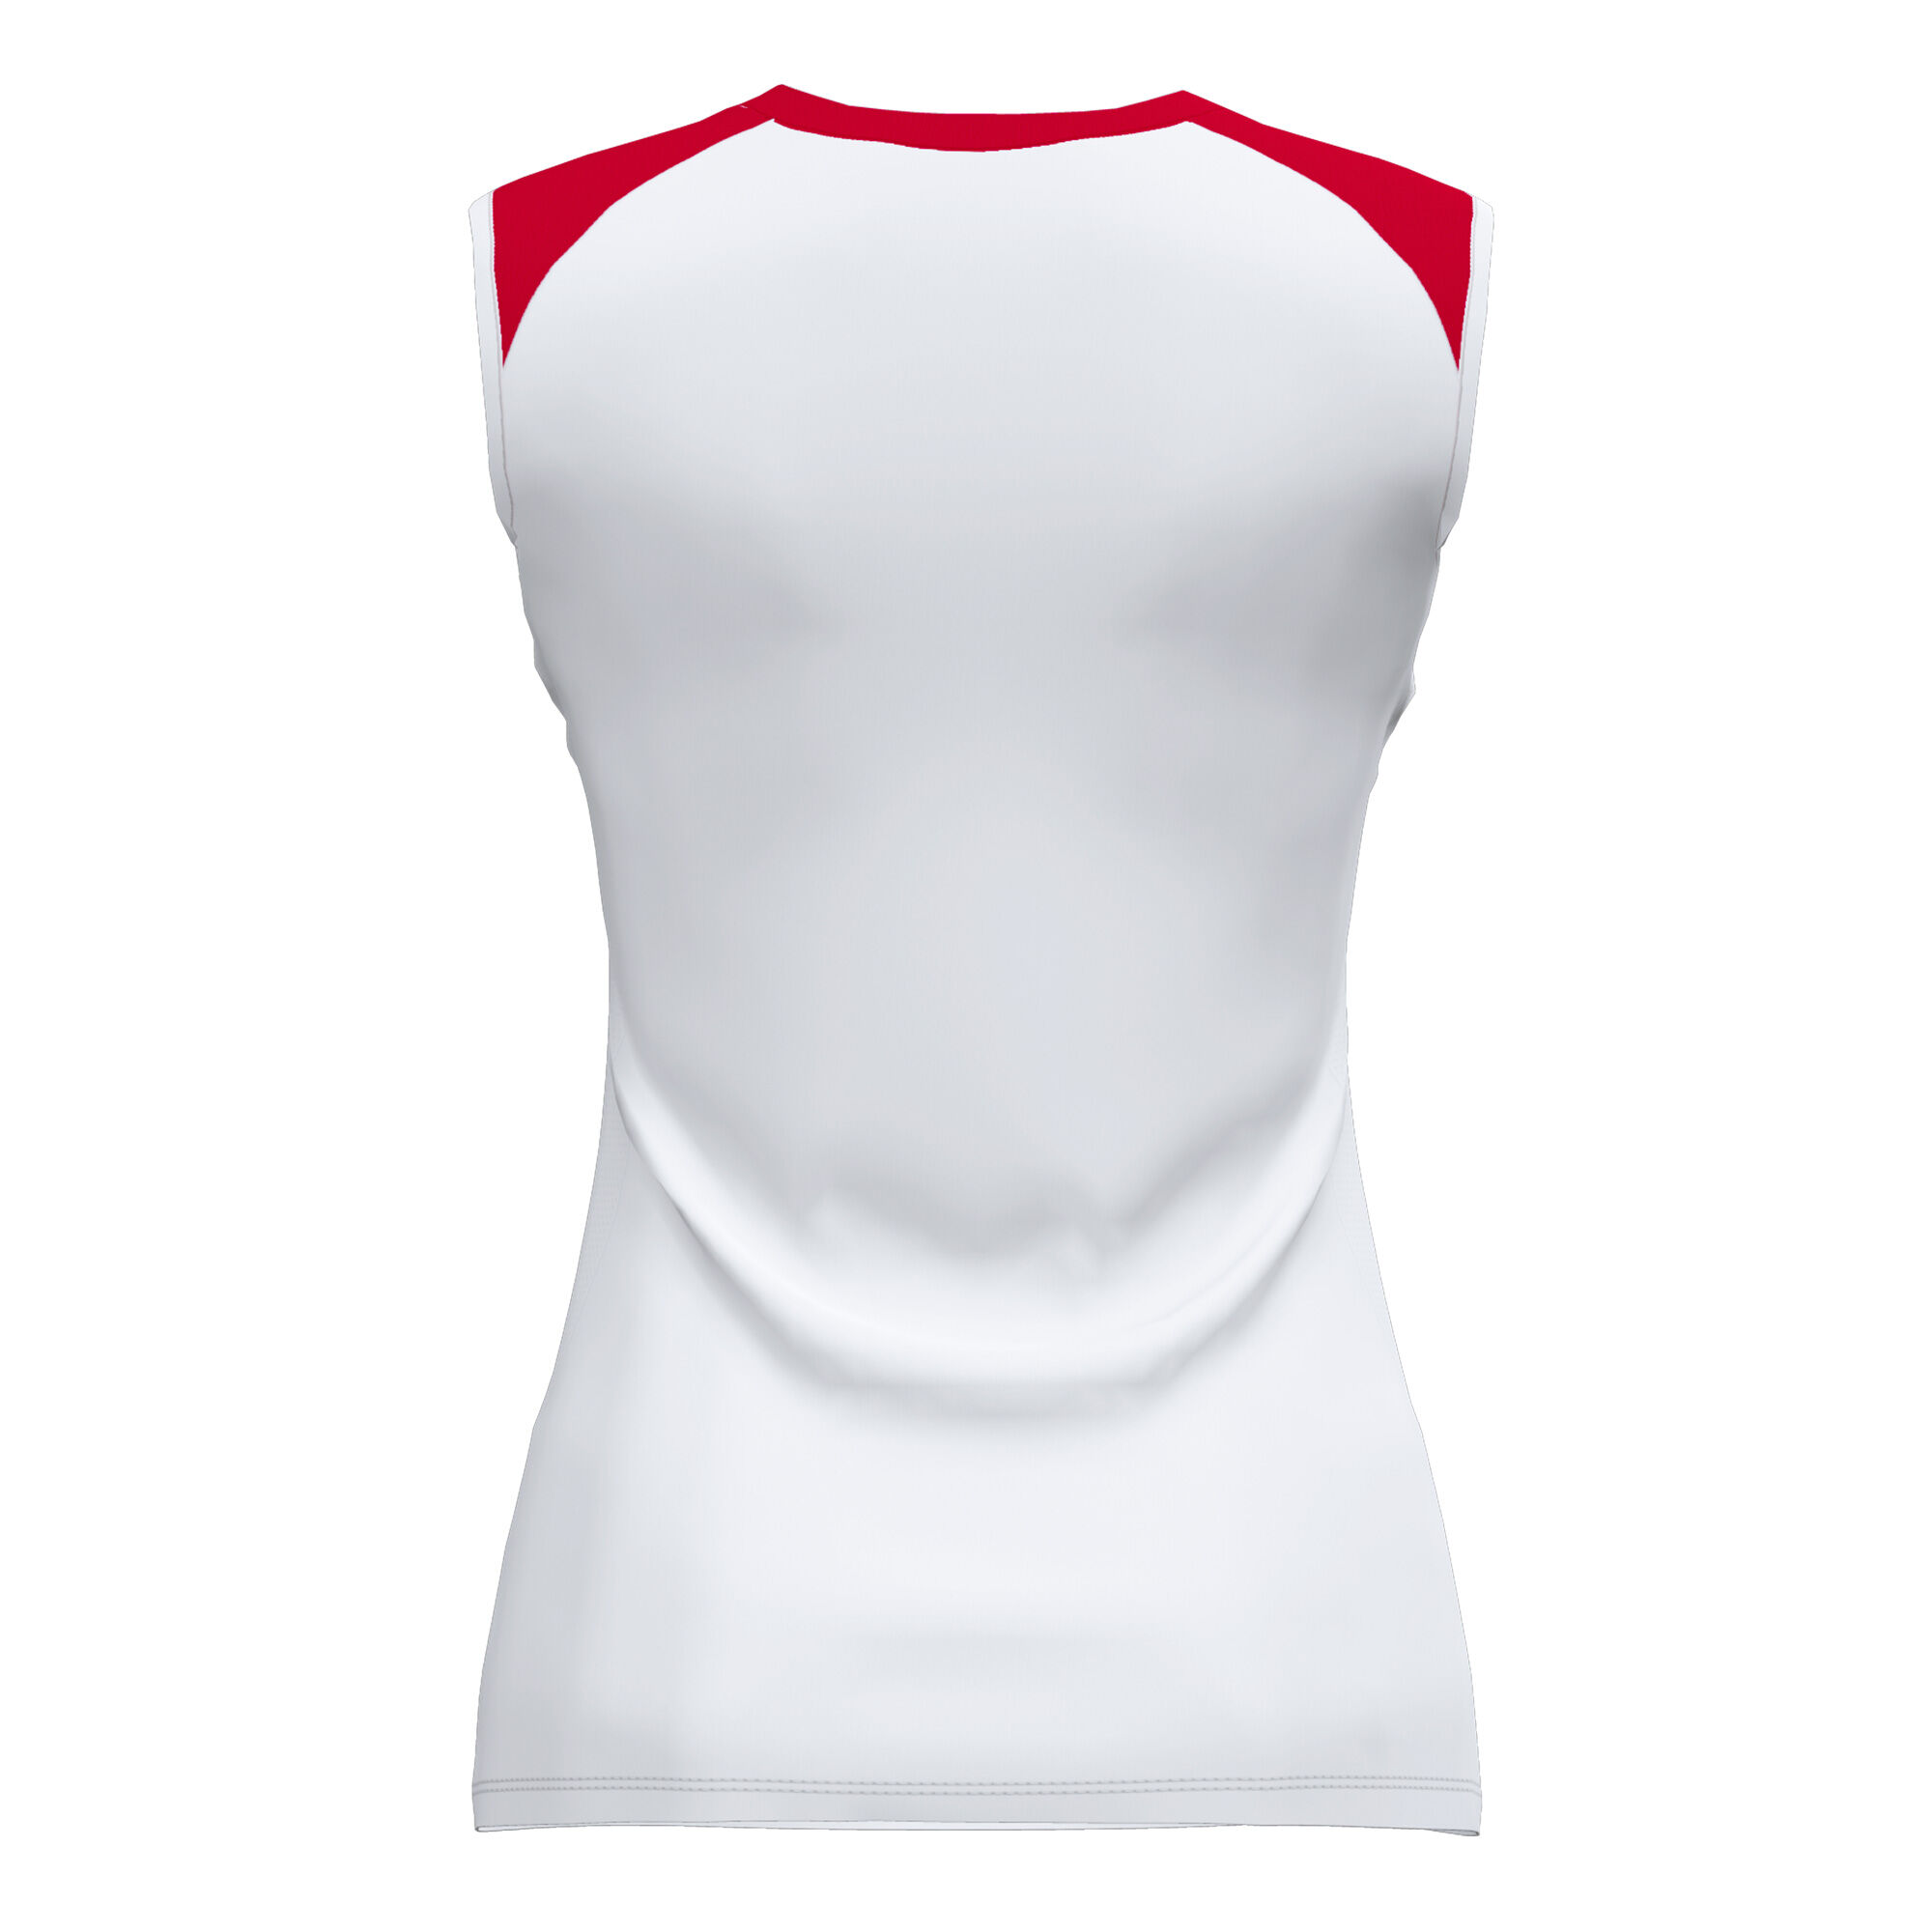 Camiseta sin mangas mujer Supernova II blanco rojo